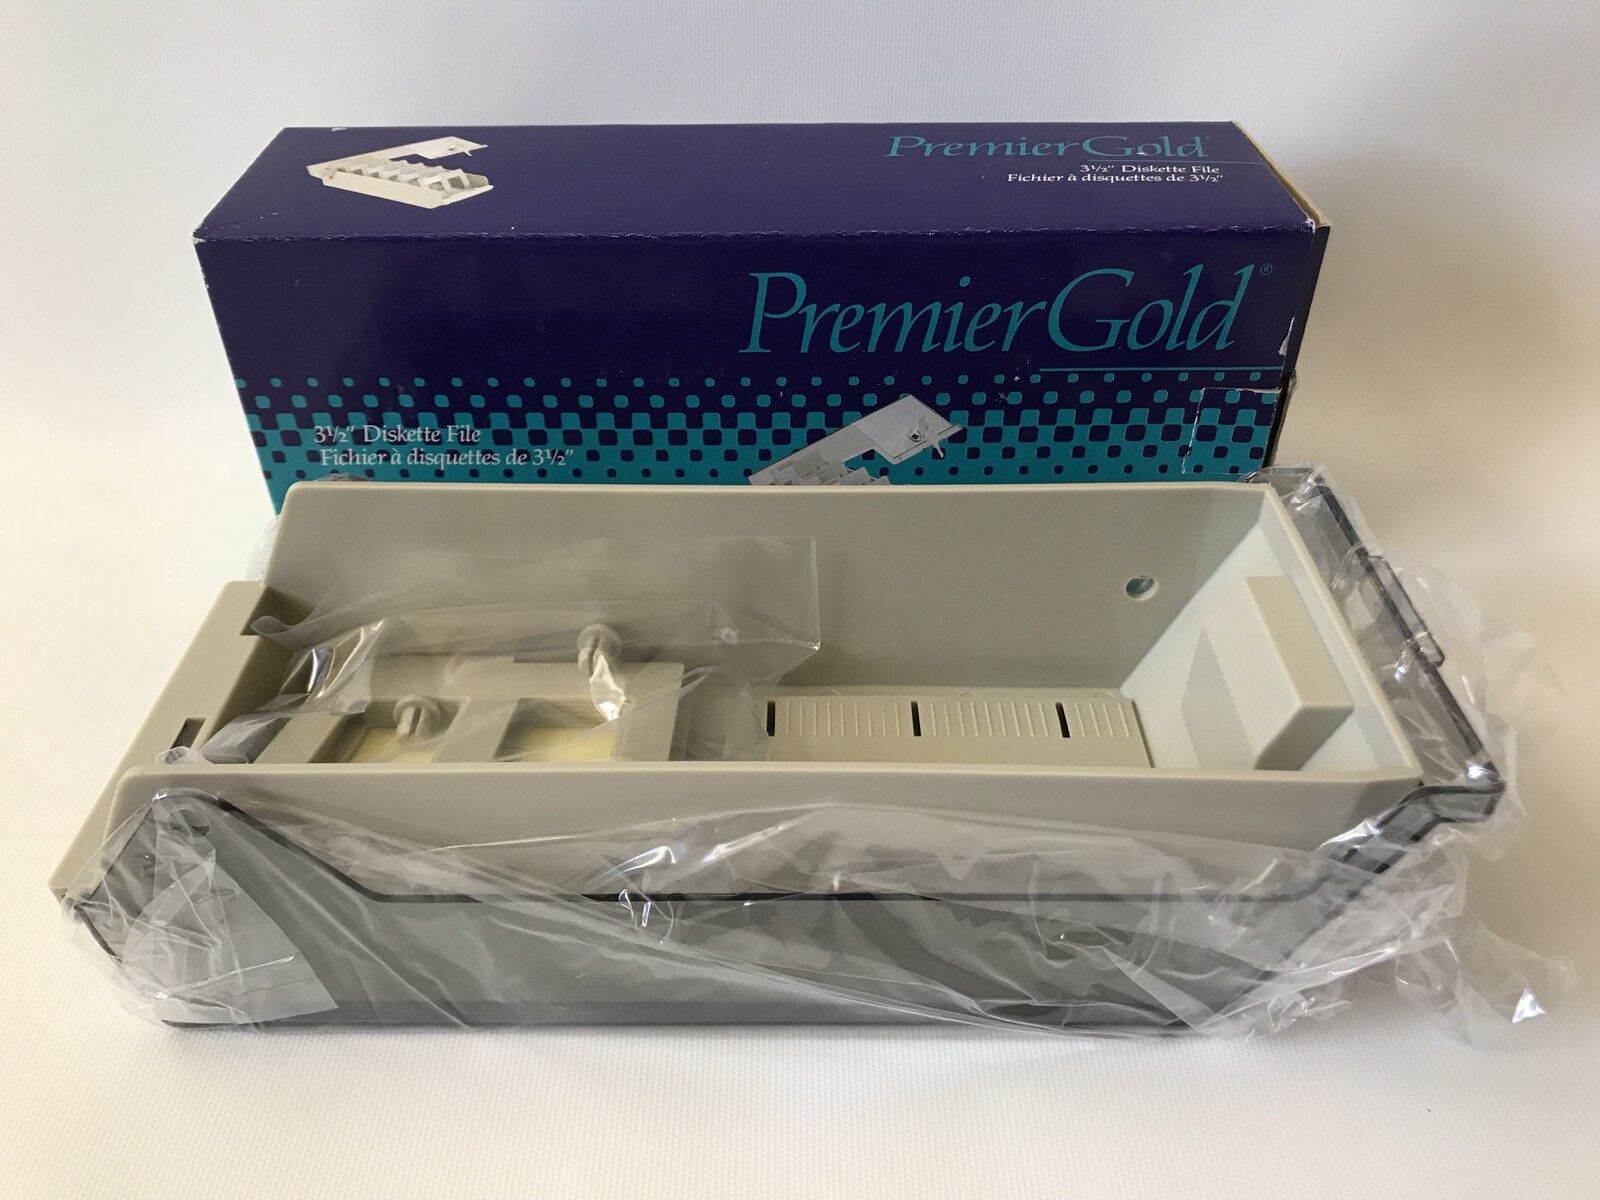 New Premier Gold 3 1/2” Diskette File Vintage 50 Disc Capacity Lock Plastic Case